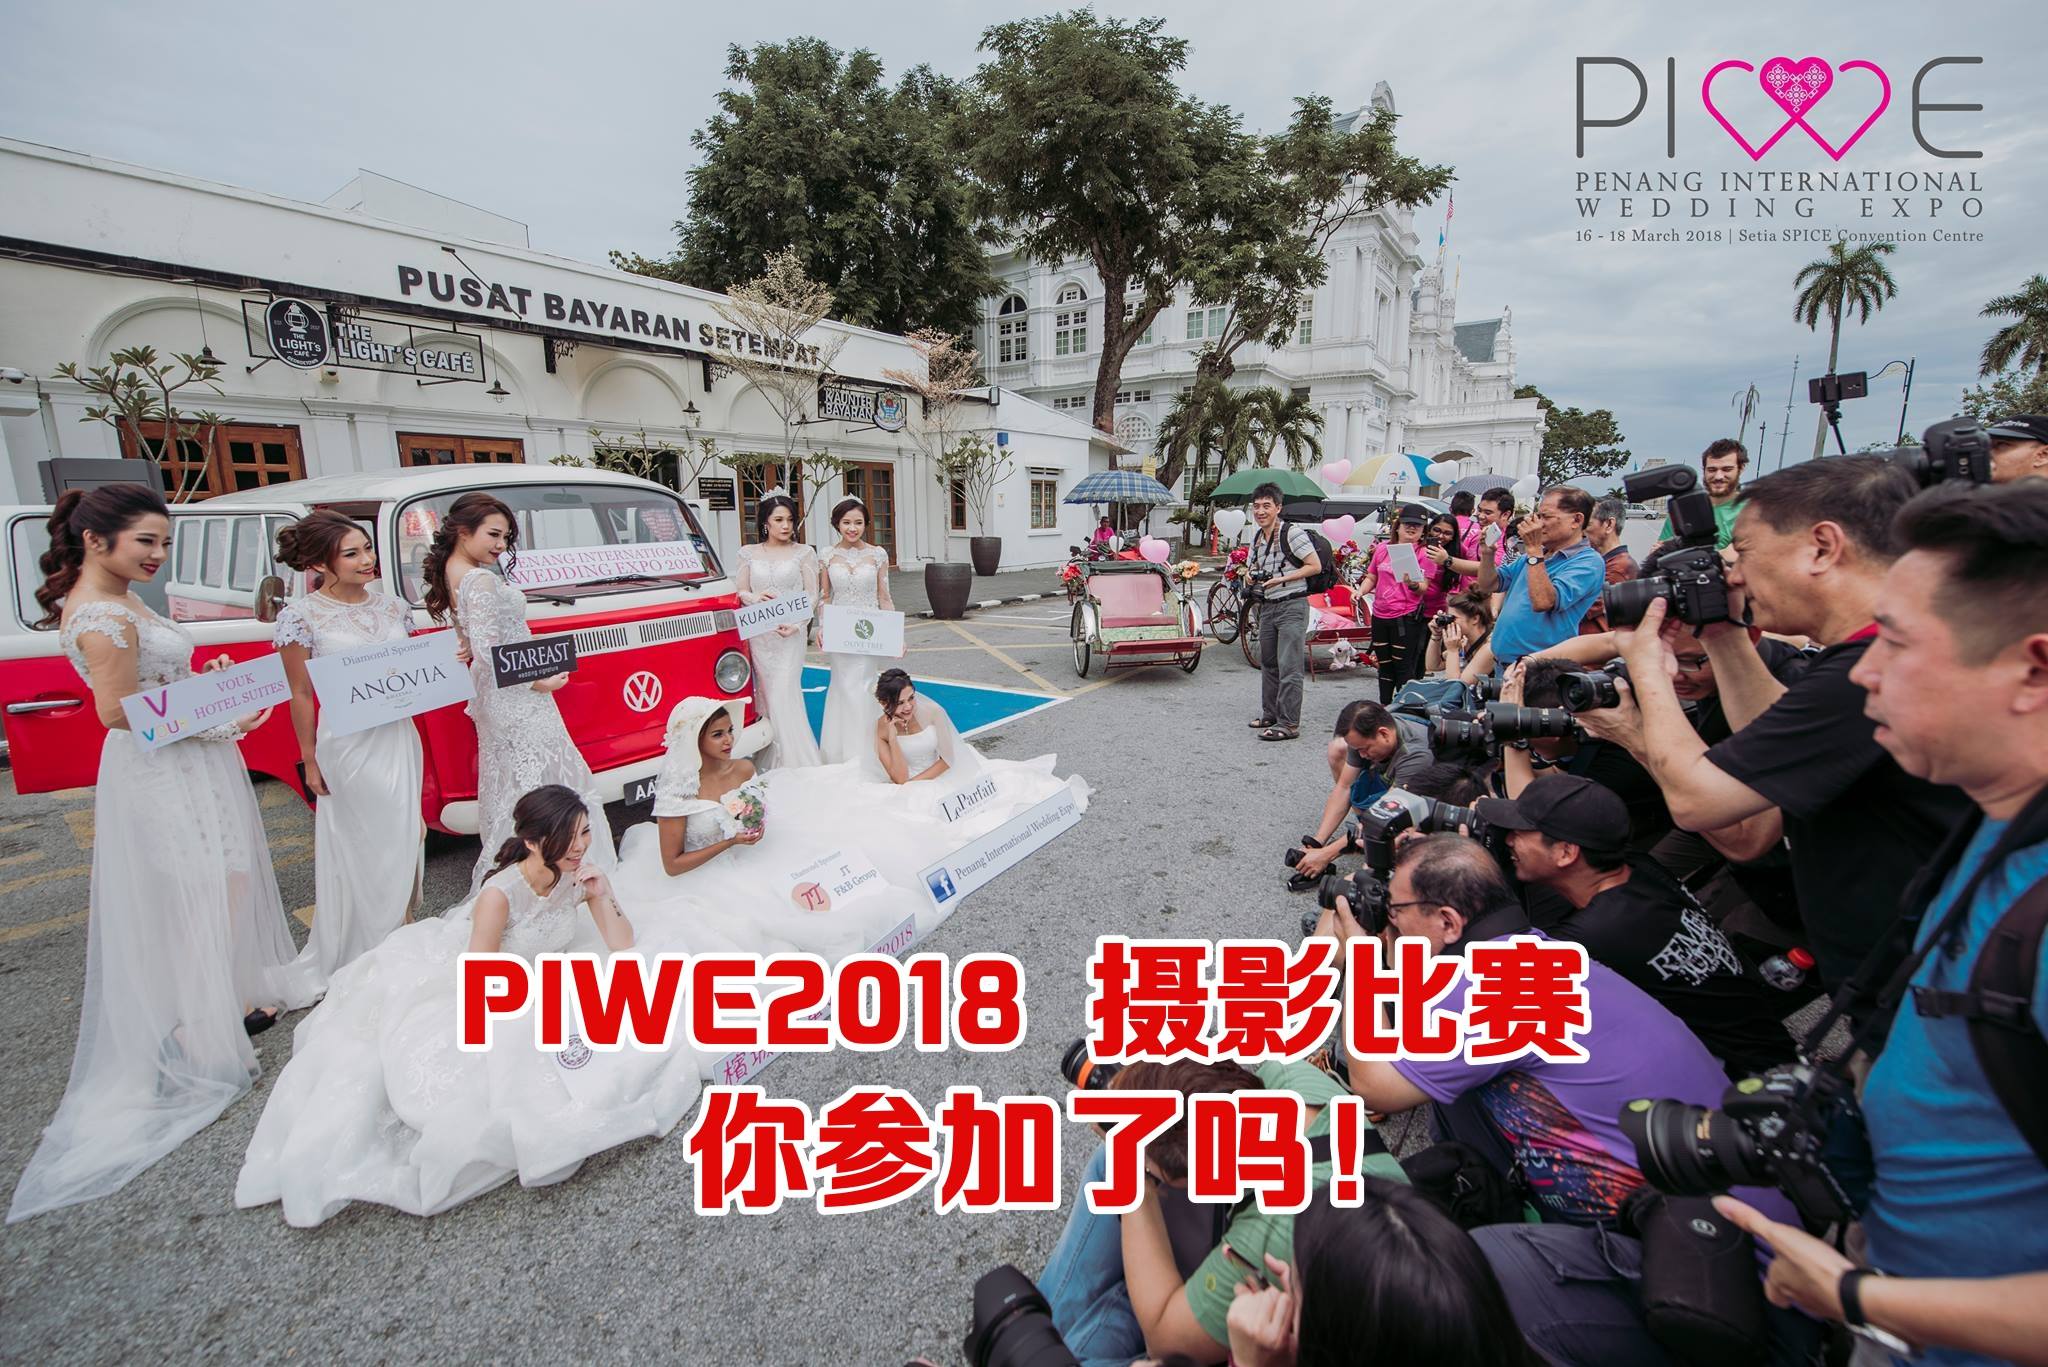 The First Penang International Wedding Expo 2018